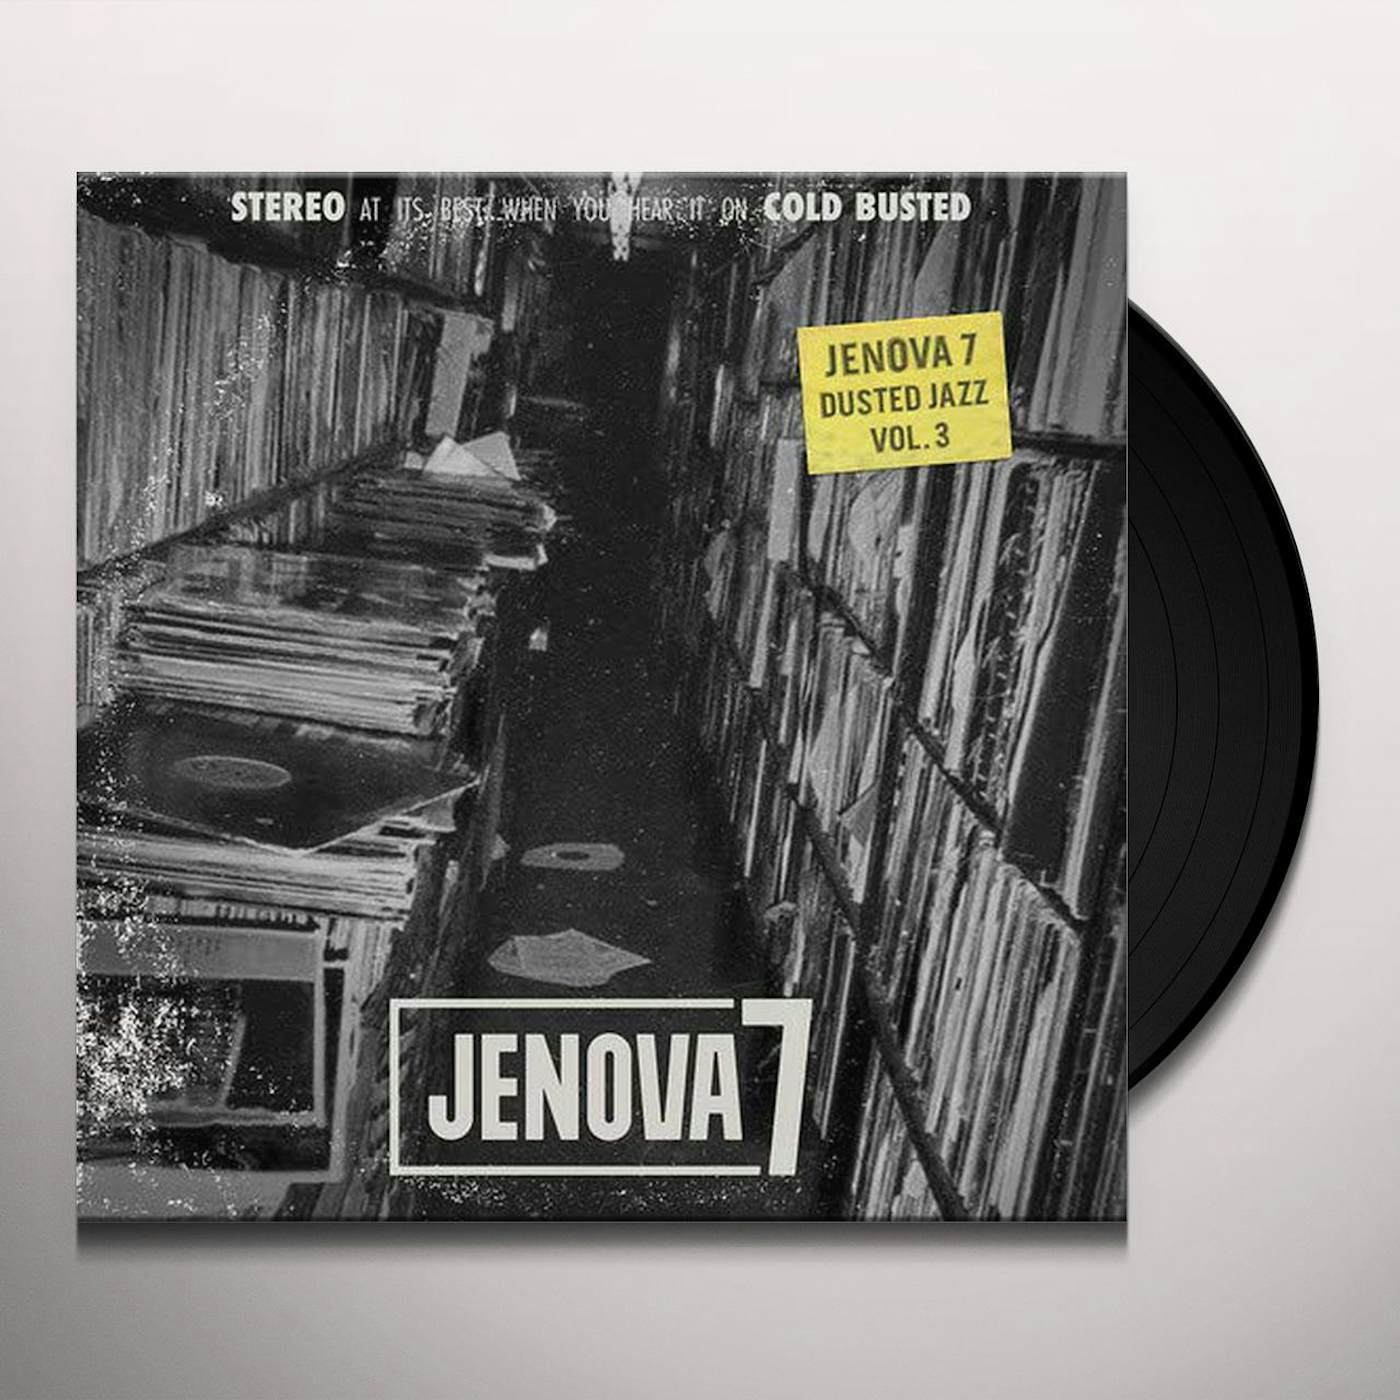 Jenova 7 DUSTED JAZZ VOL. 3 Vinyl Record